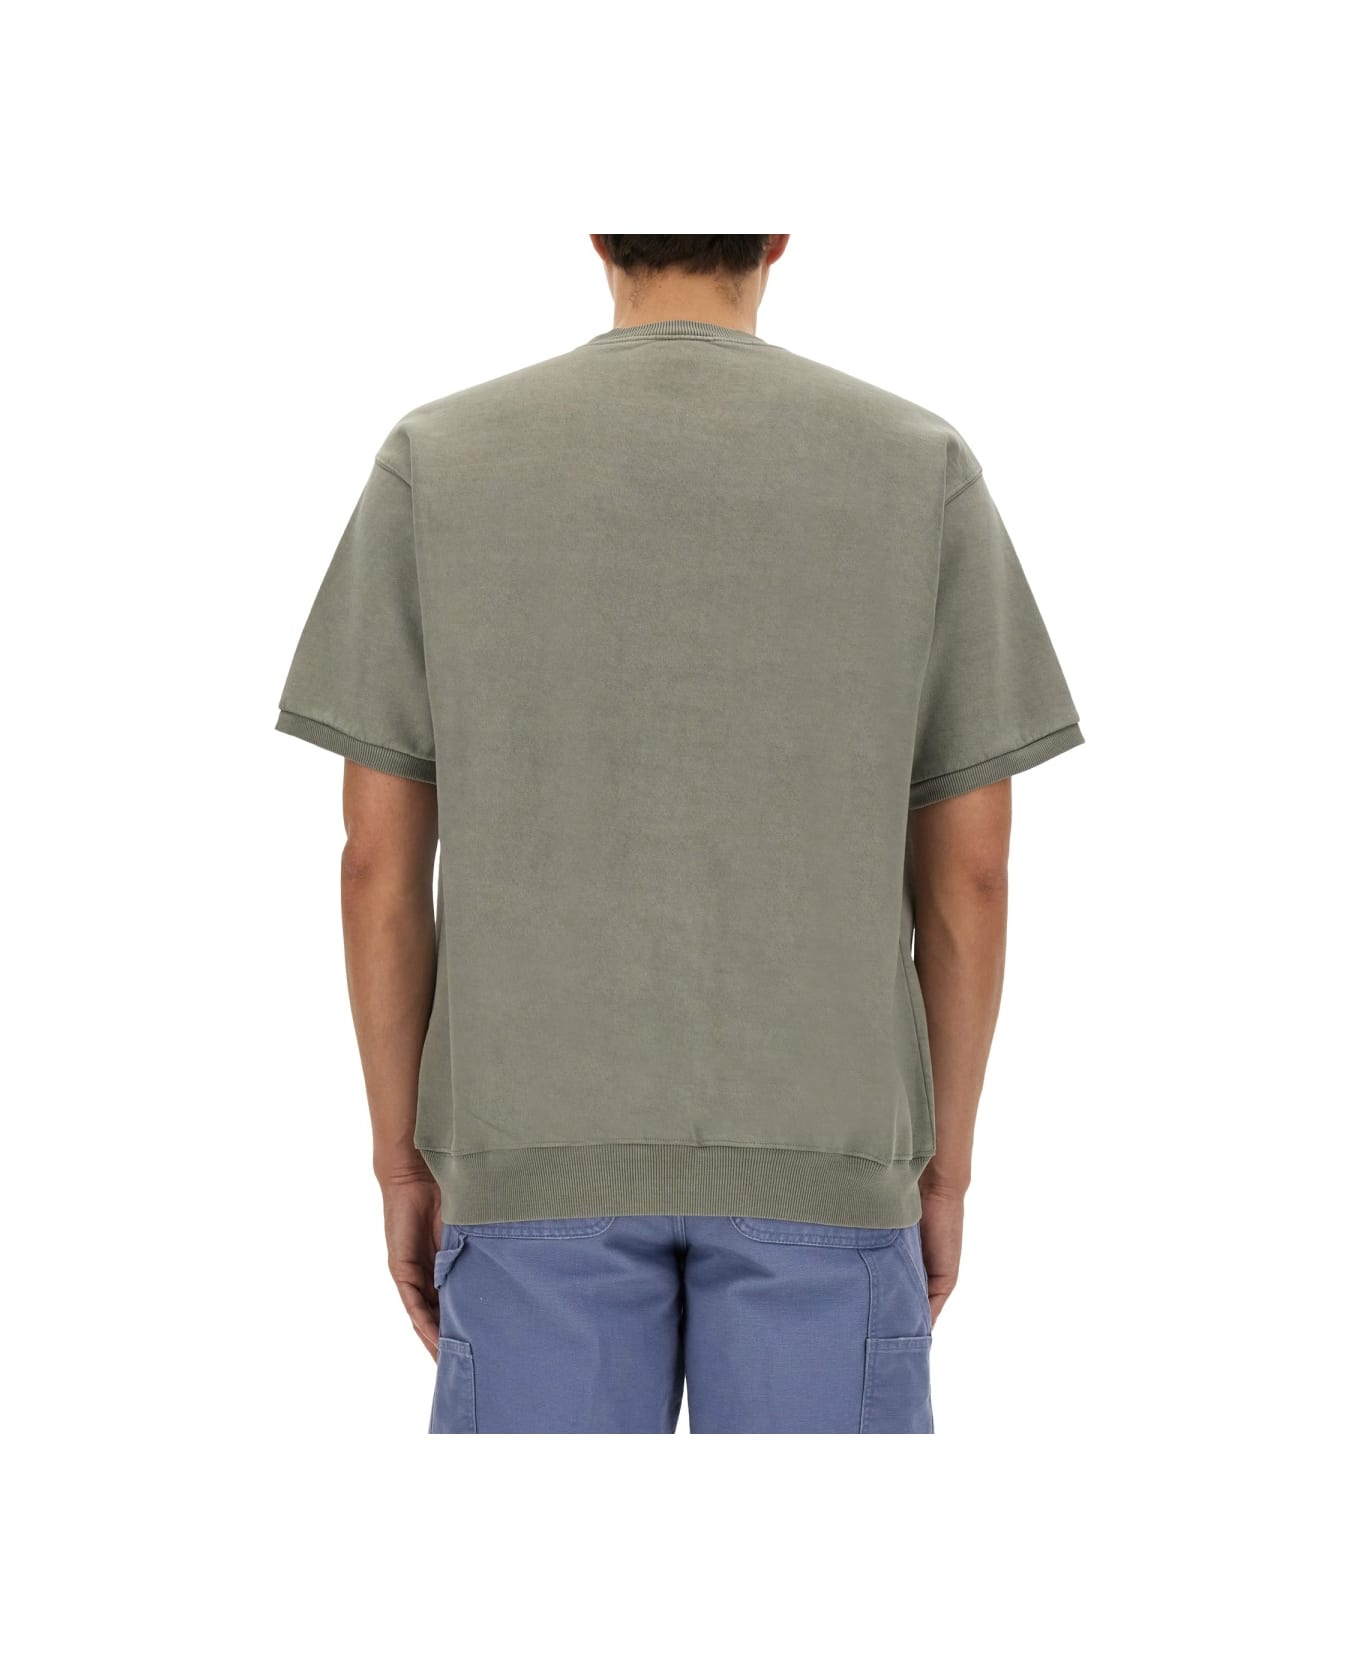 Carhartt Cotton Blend Sweatshirt - GREY